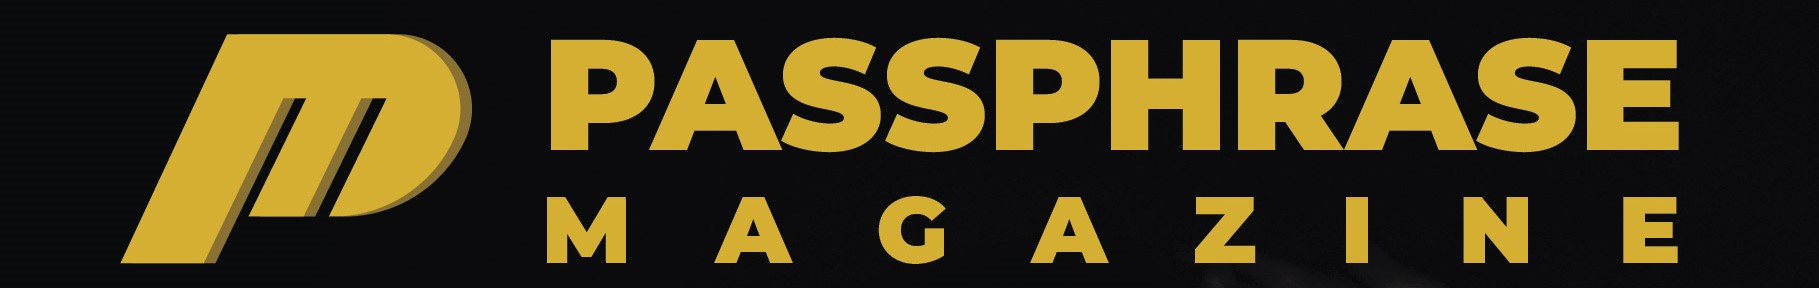 Passphrase Magazine Logo